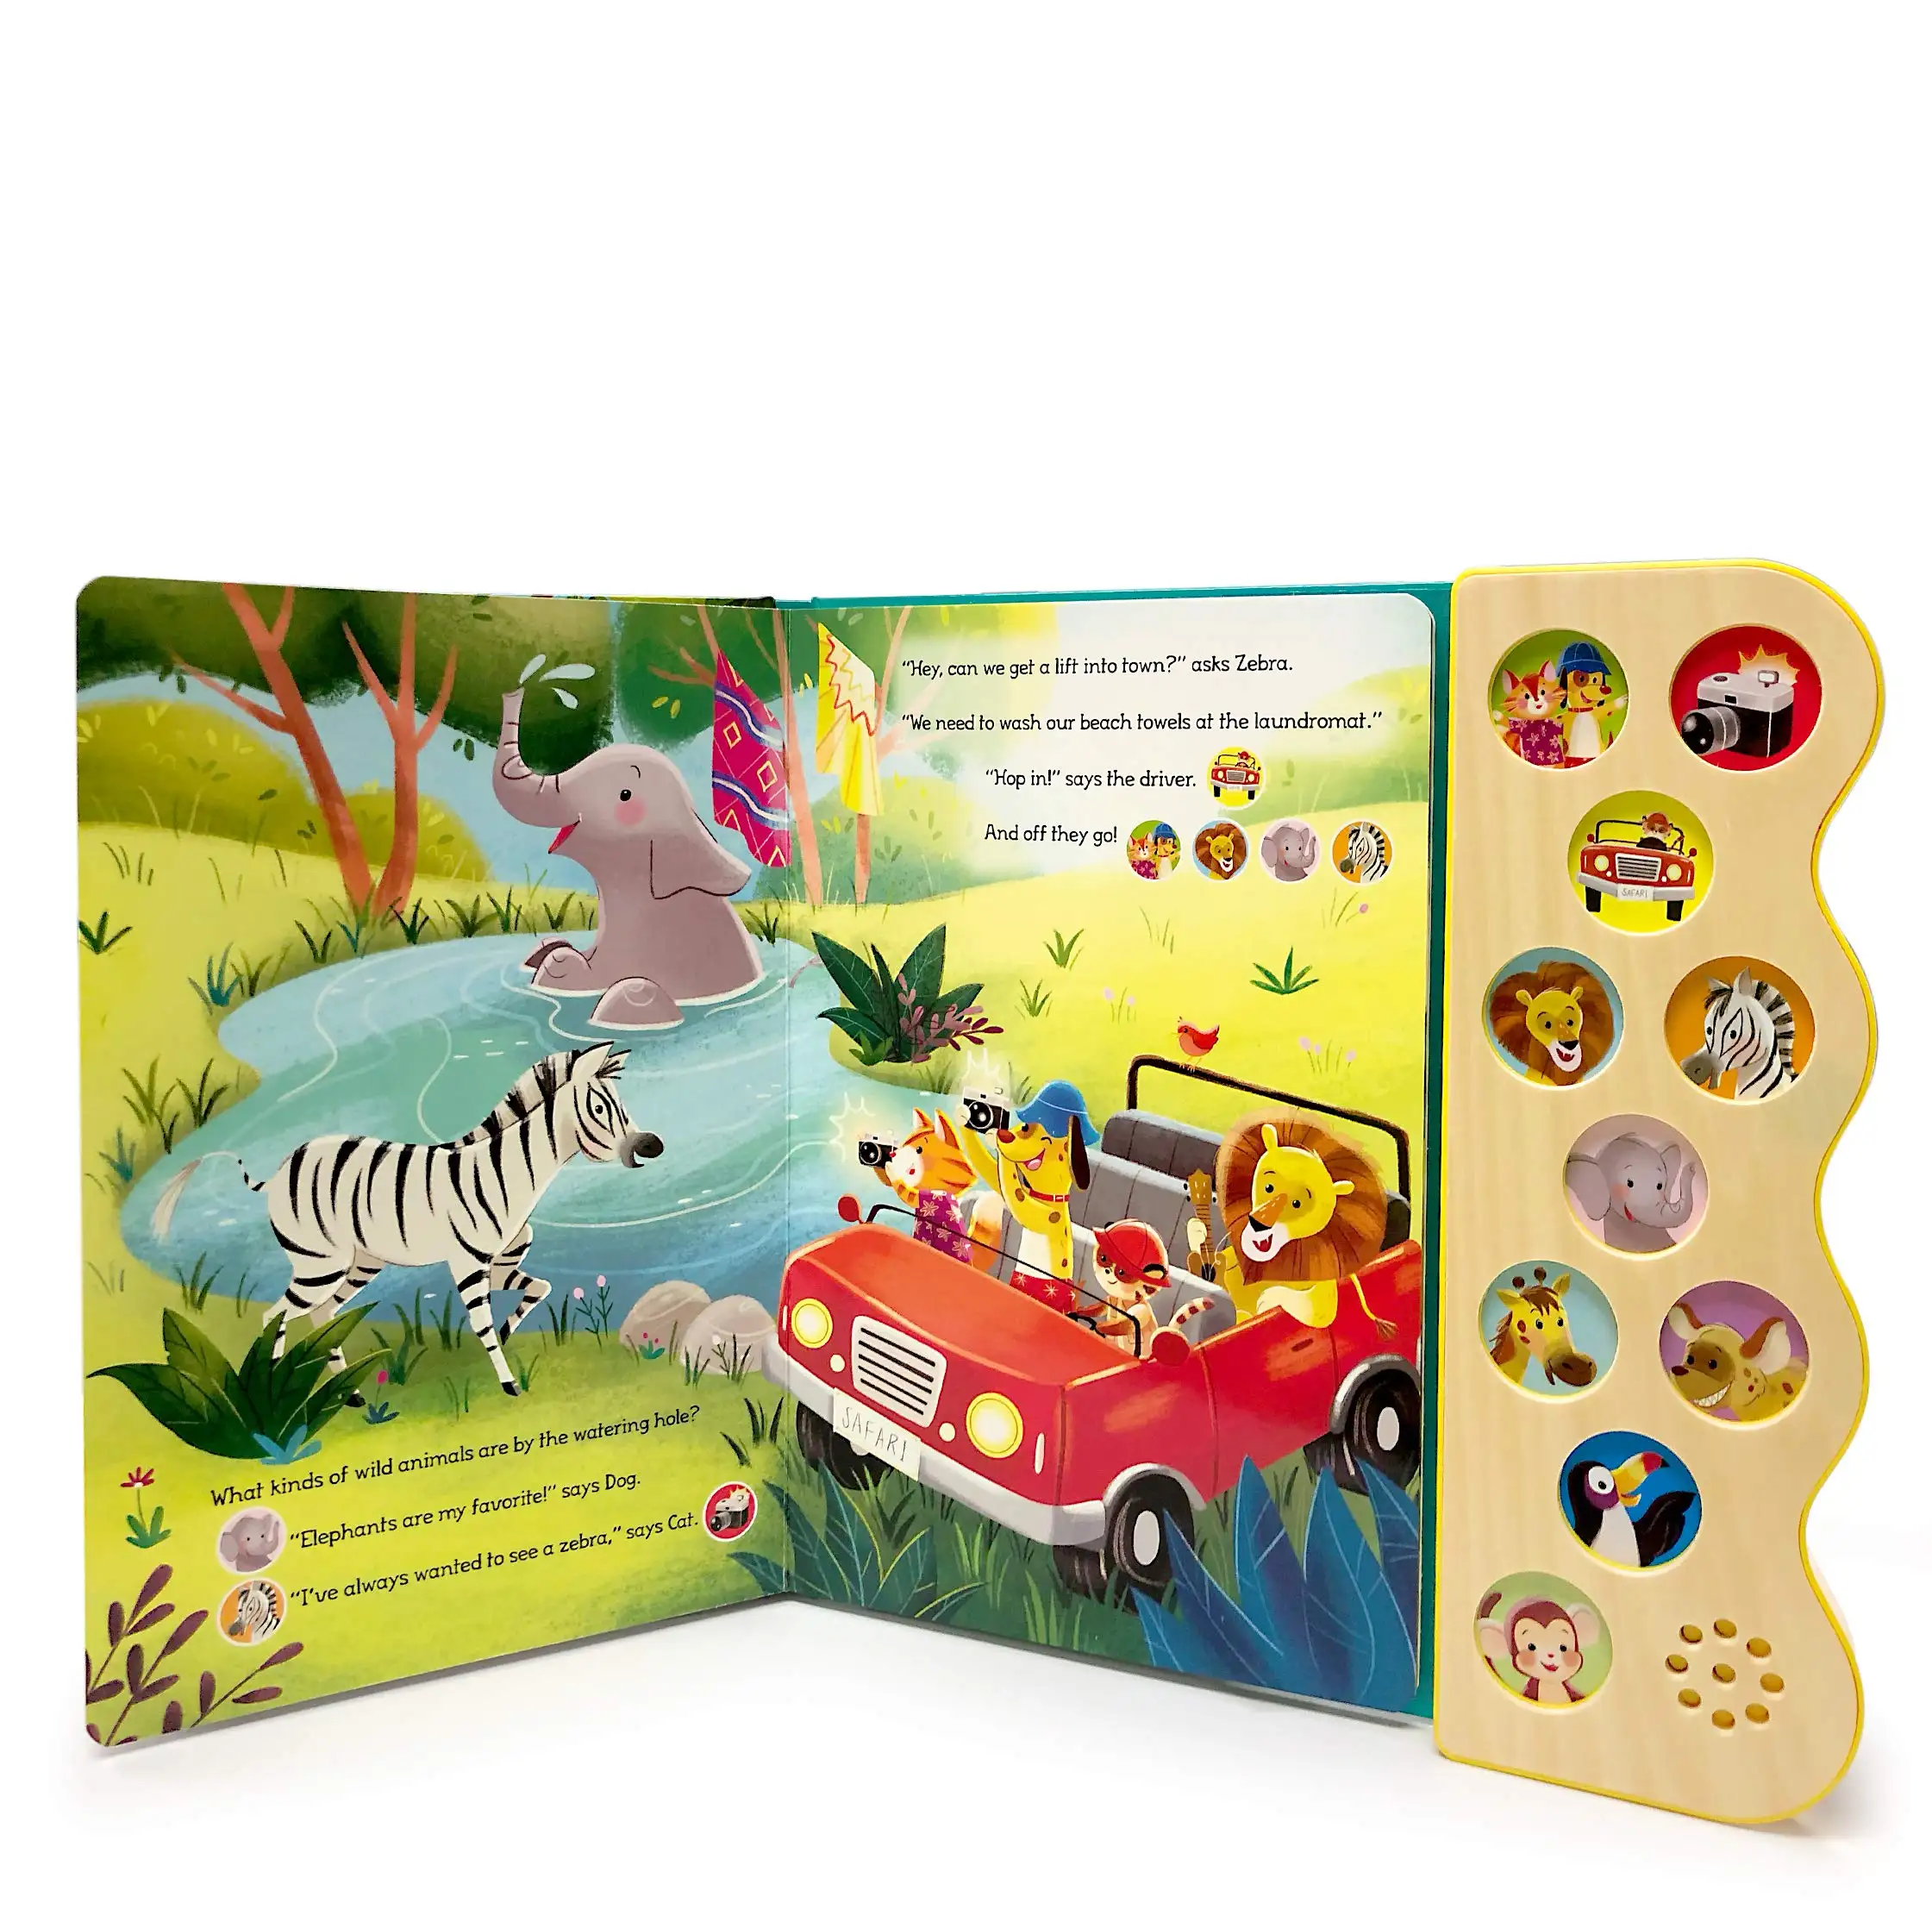 Buku suara anak usia dini interaktif tombol tekan 10 bahasa Inggris belajar bayi